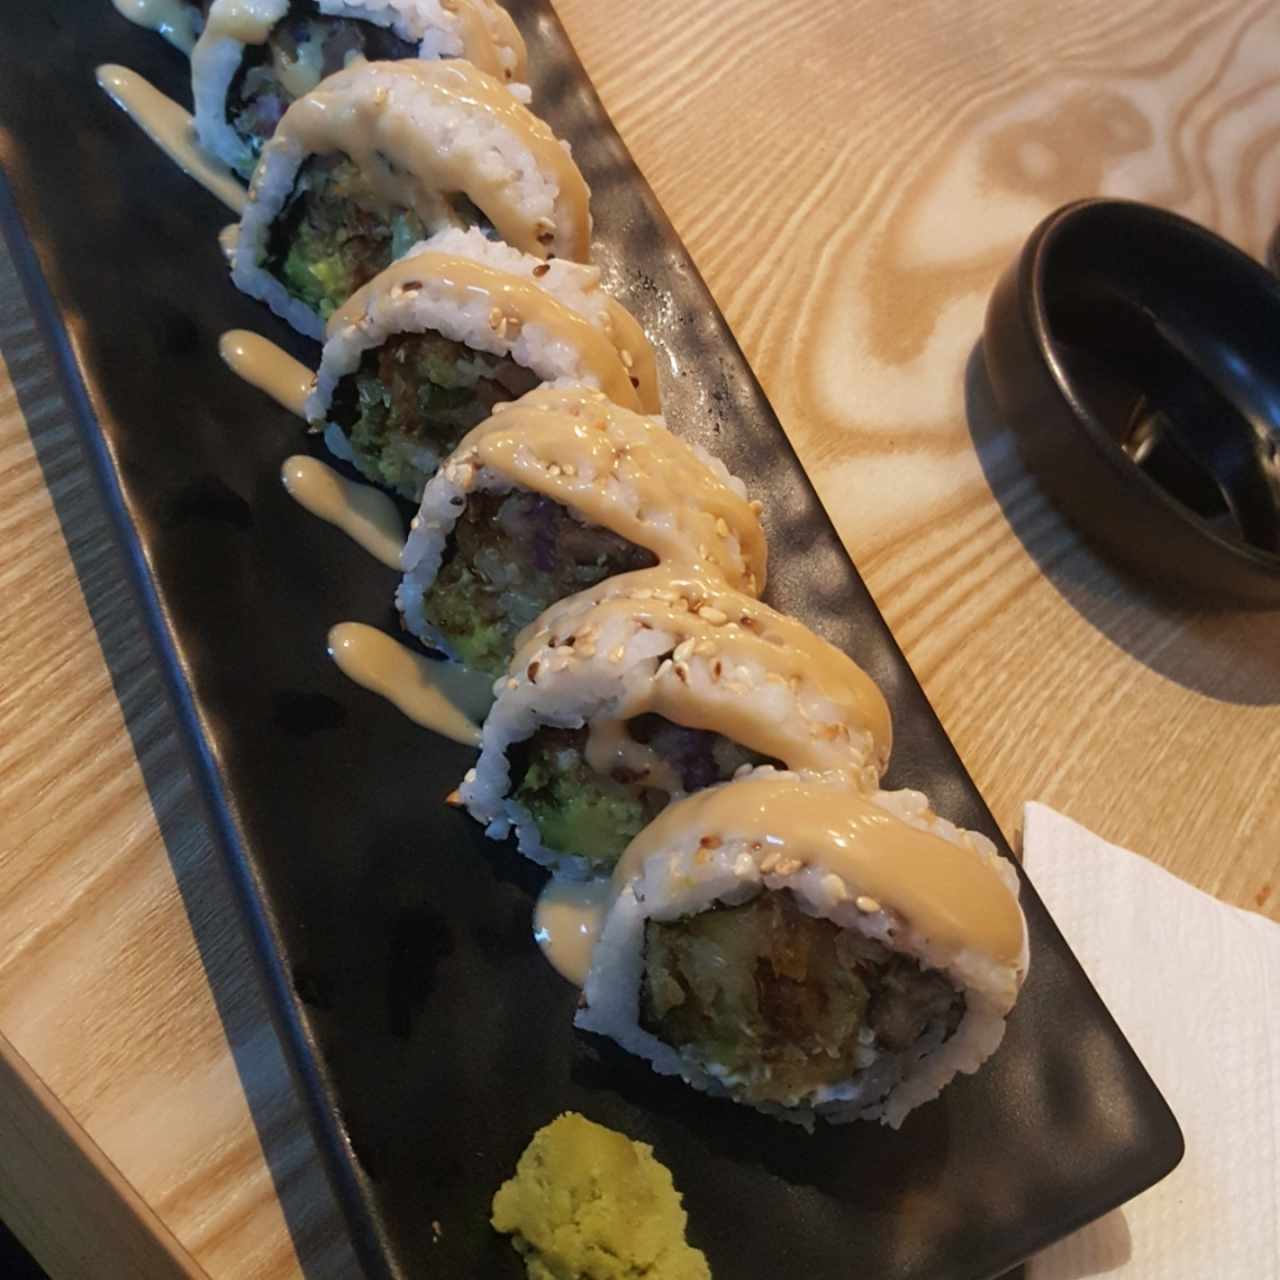 Sushi rolls - Veggie roll